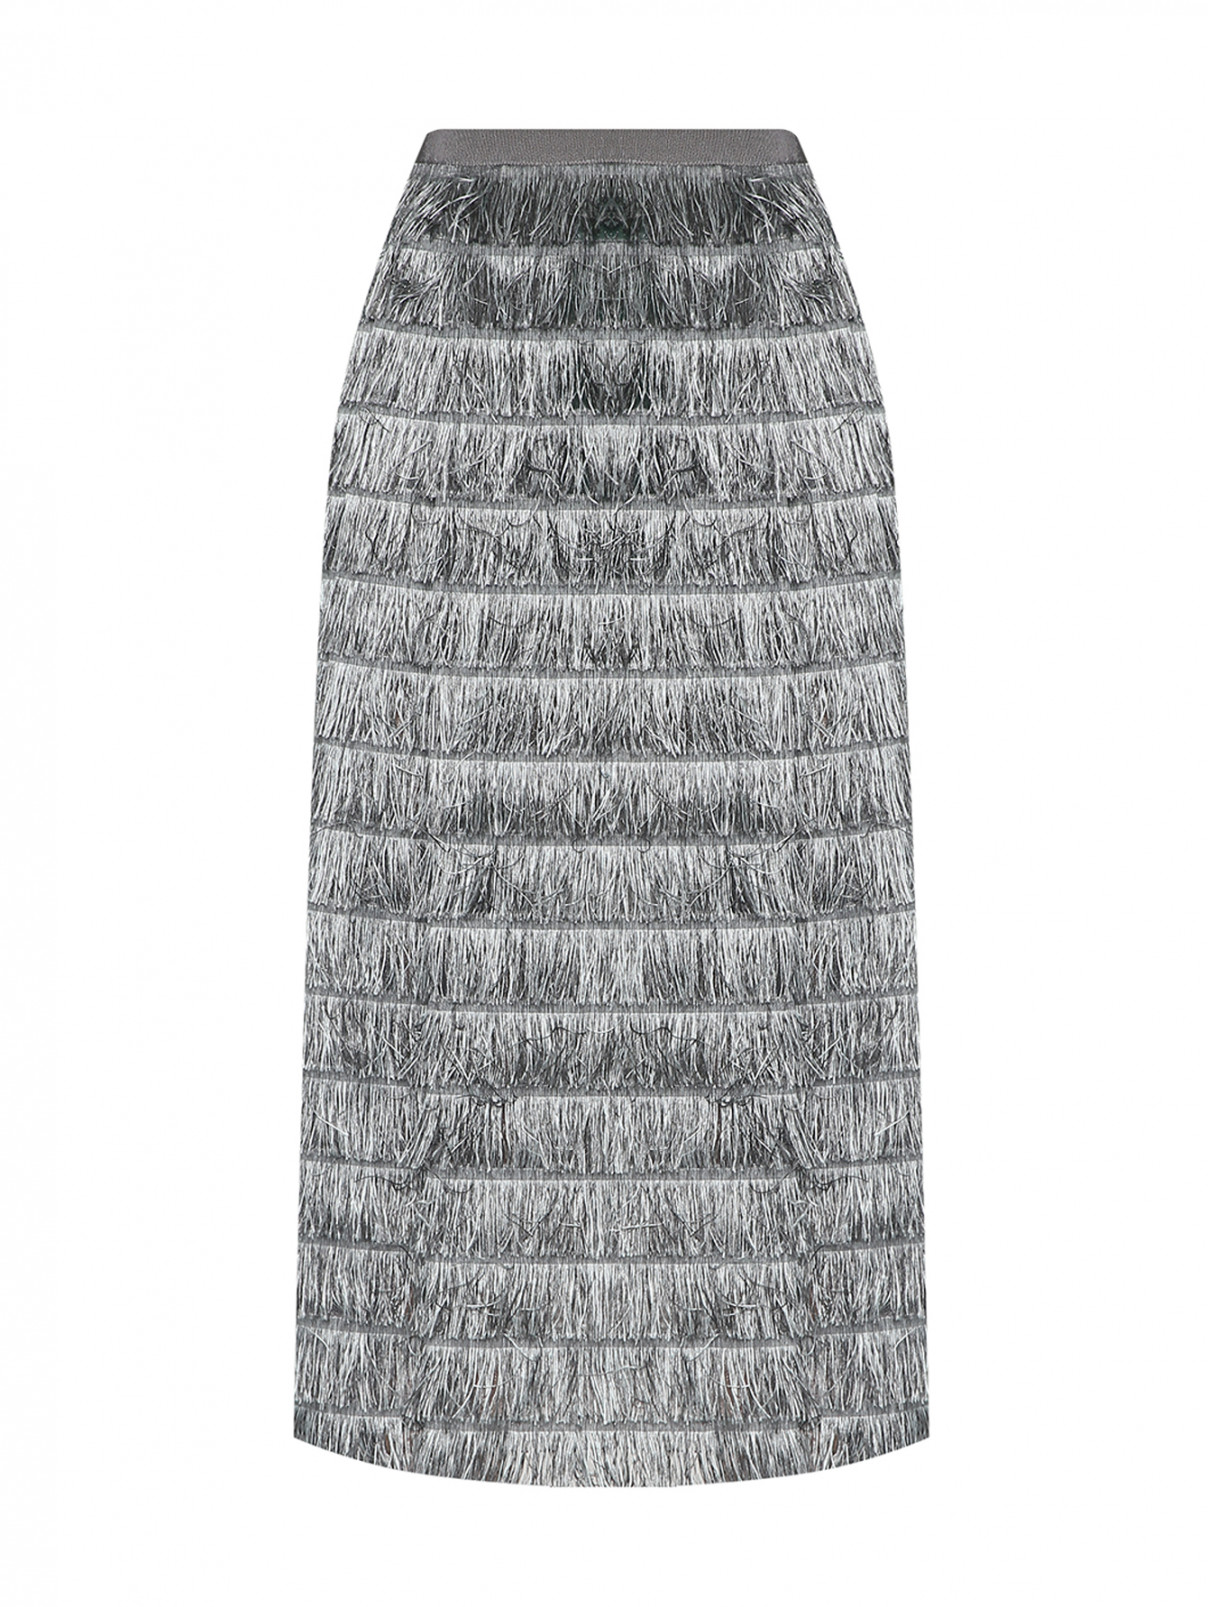 Юбка-миди с бахромой Alberta Ferretti  –  Общий вид  – Цвет:  Серый